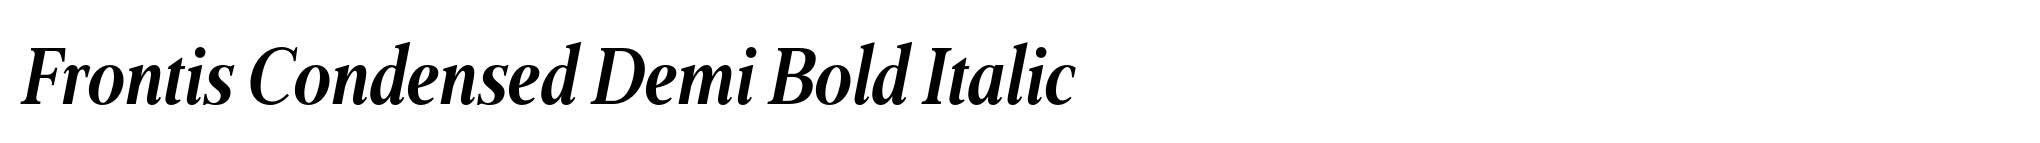 Frontis Condensed Demi Bold Italic image